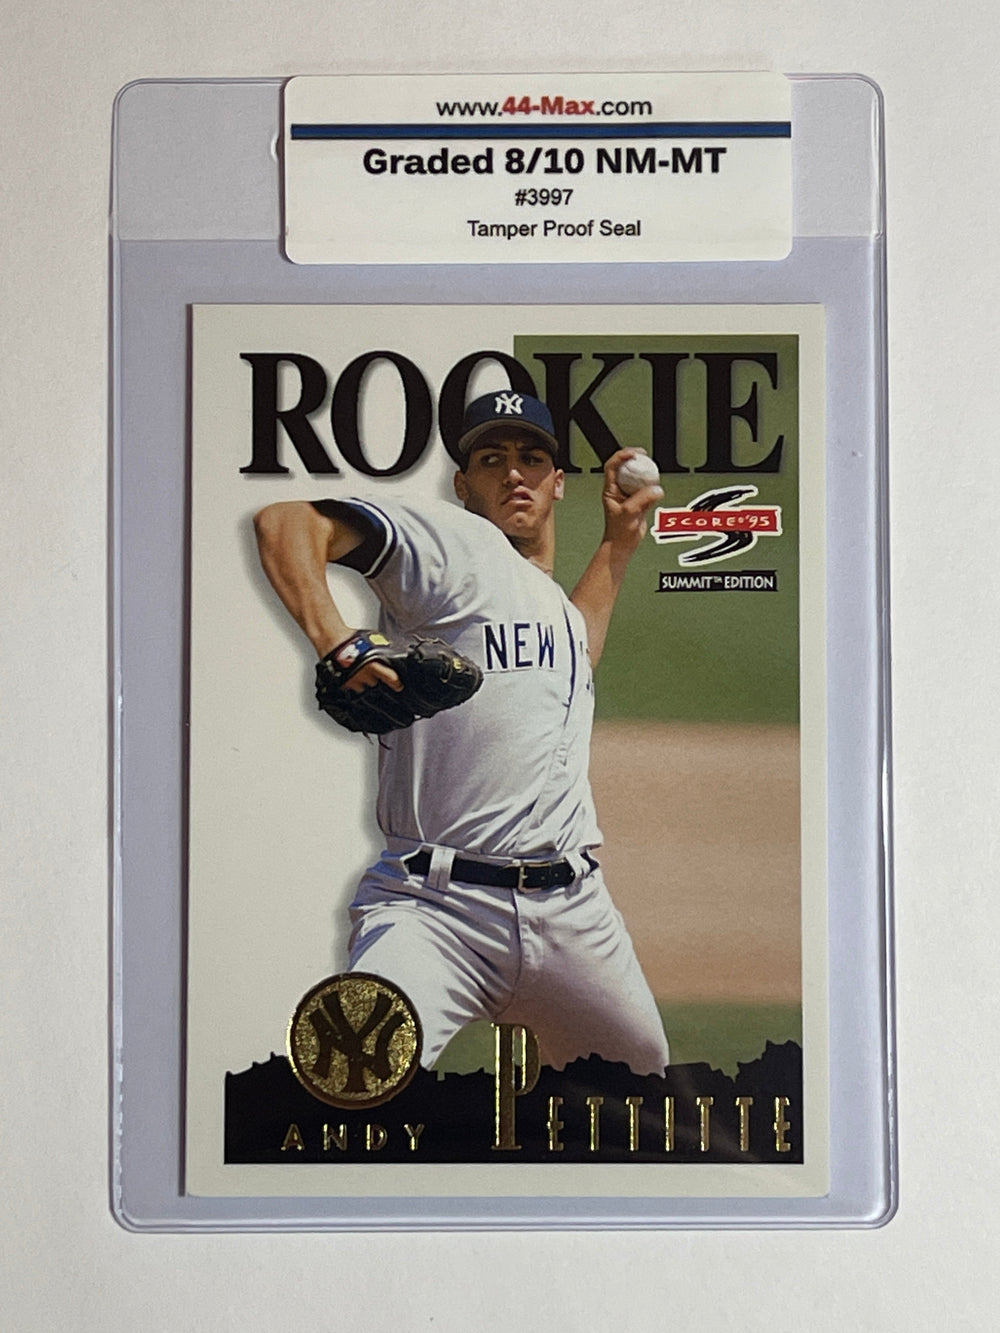 Andy Pettitte 1995 Score Summit Baseball Card. 44-Max 8/10 NM-MT  #3997